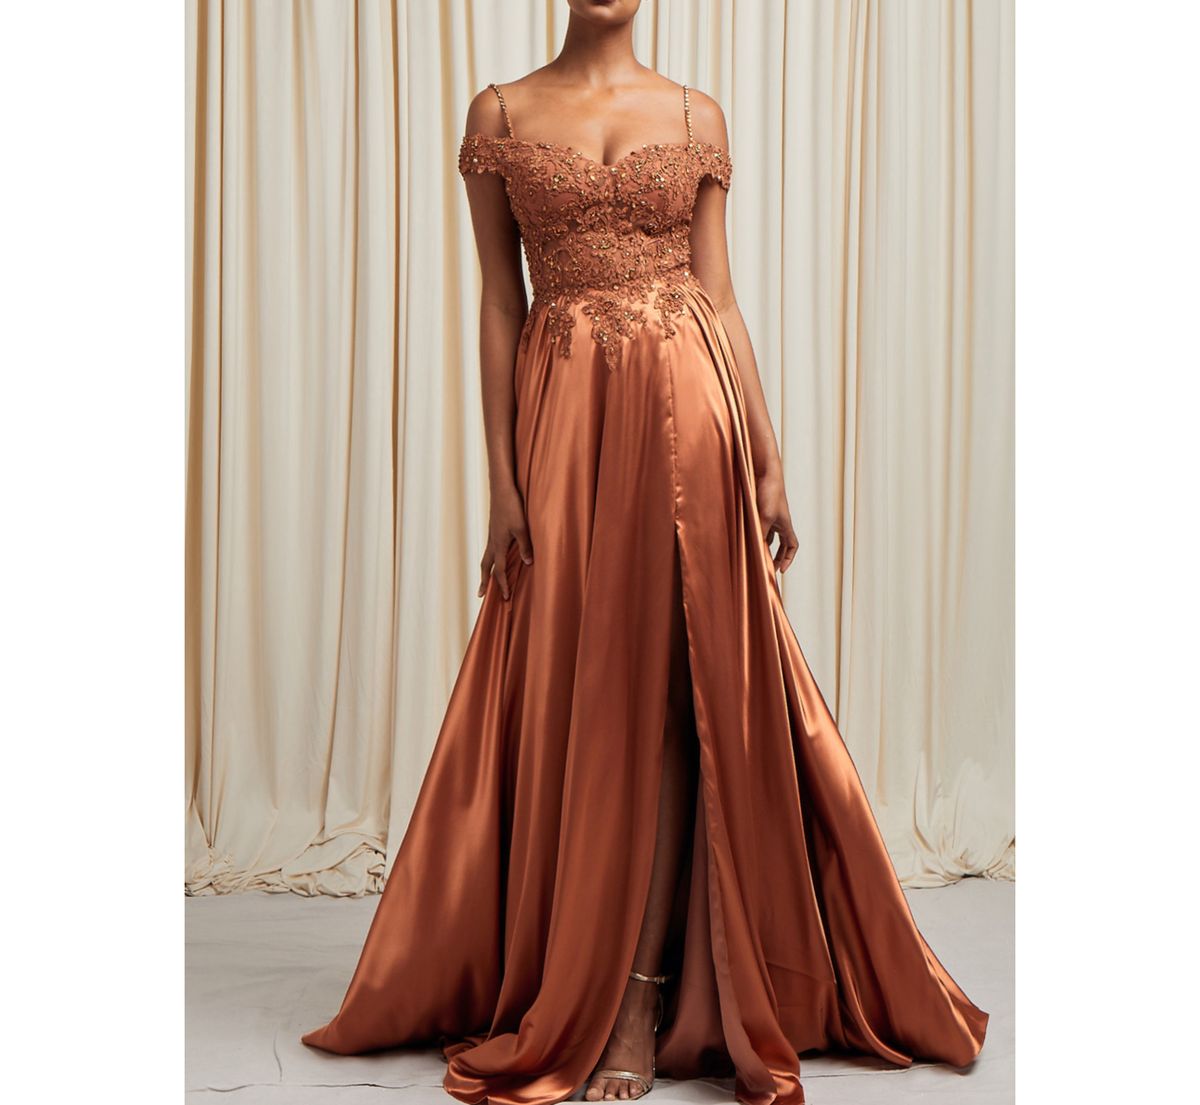 Lea A-line orange satin prom dress - Vintage Touch Studio